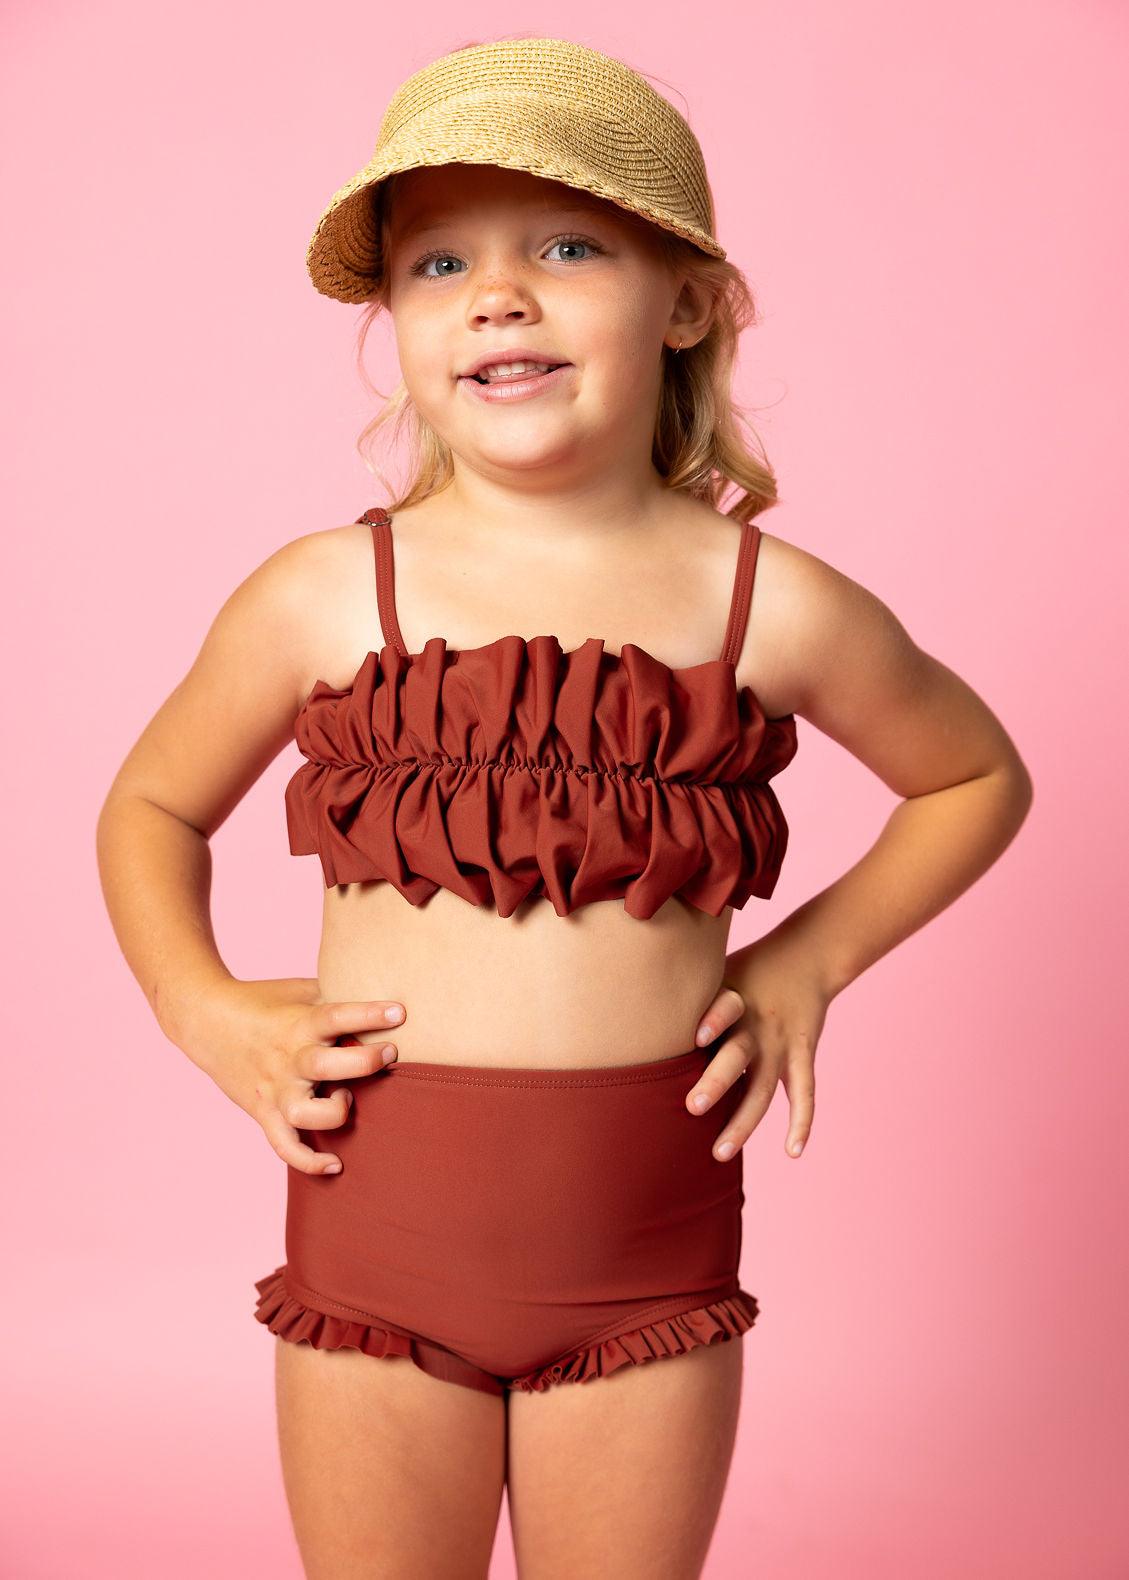 Girls Crop Top Swimsuit - Amber Brown